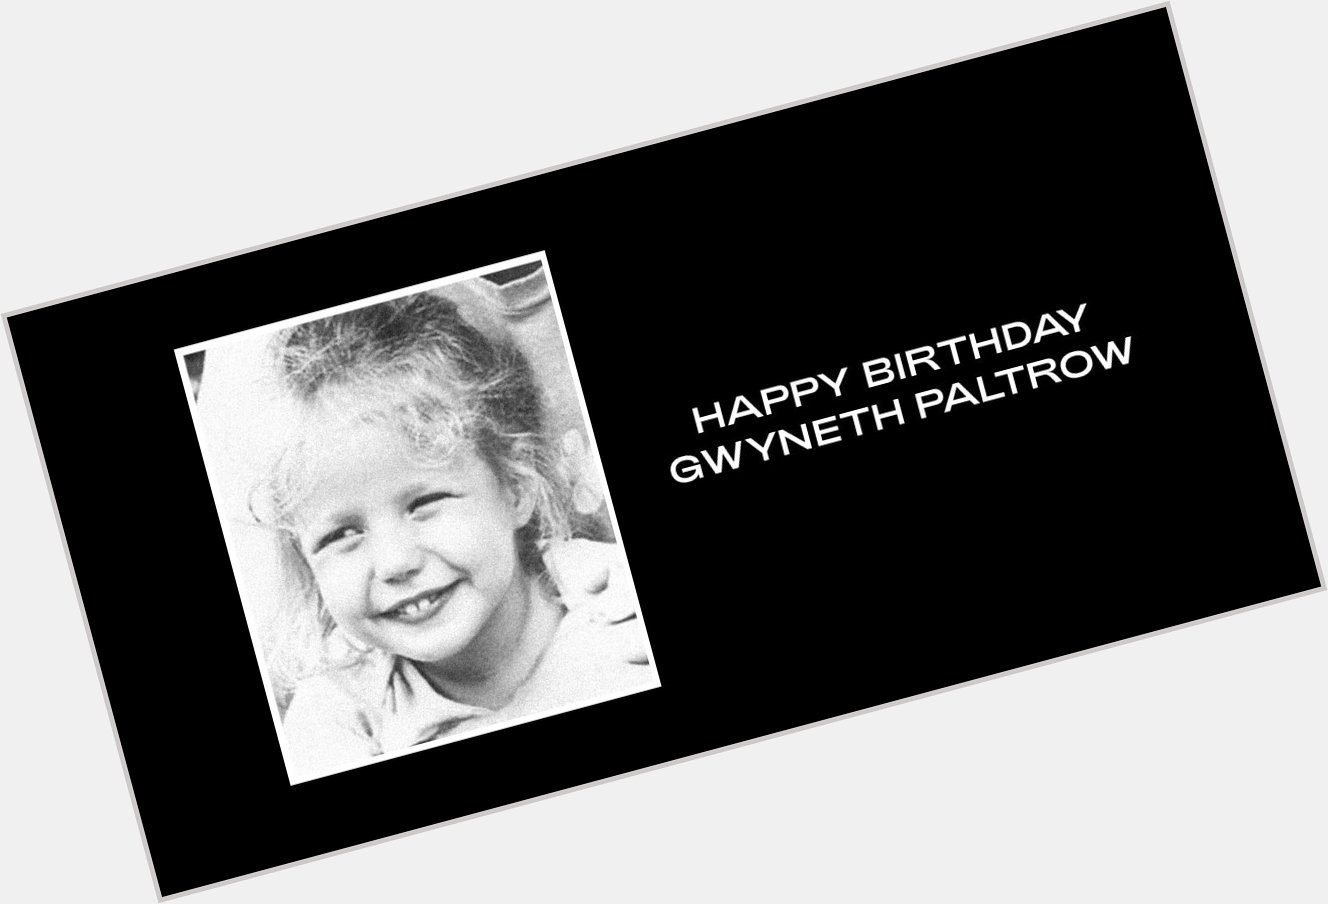 Beyoncé wishes Gwyneth Paltrow a happy 49th birthday via her website  